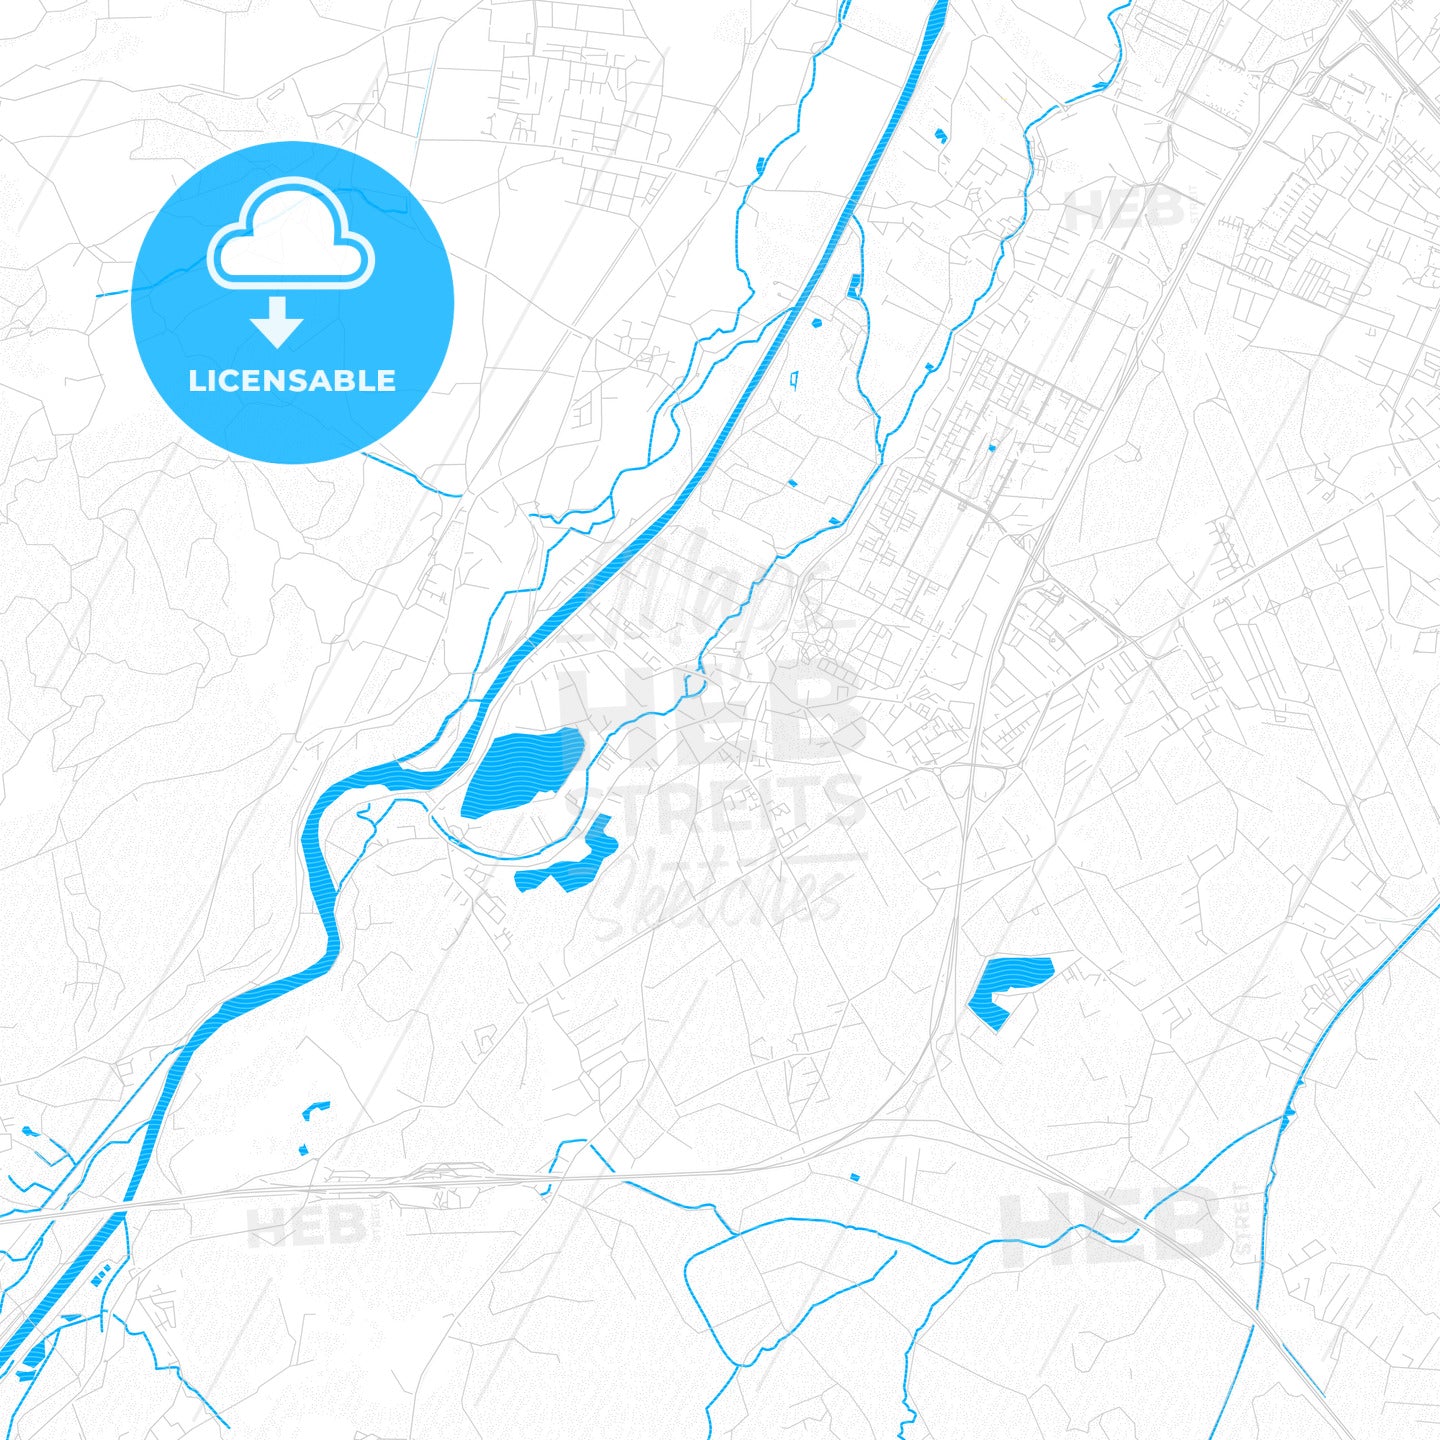 Wals-Siezenheim, Austria PDF vector map with water in focus